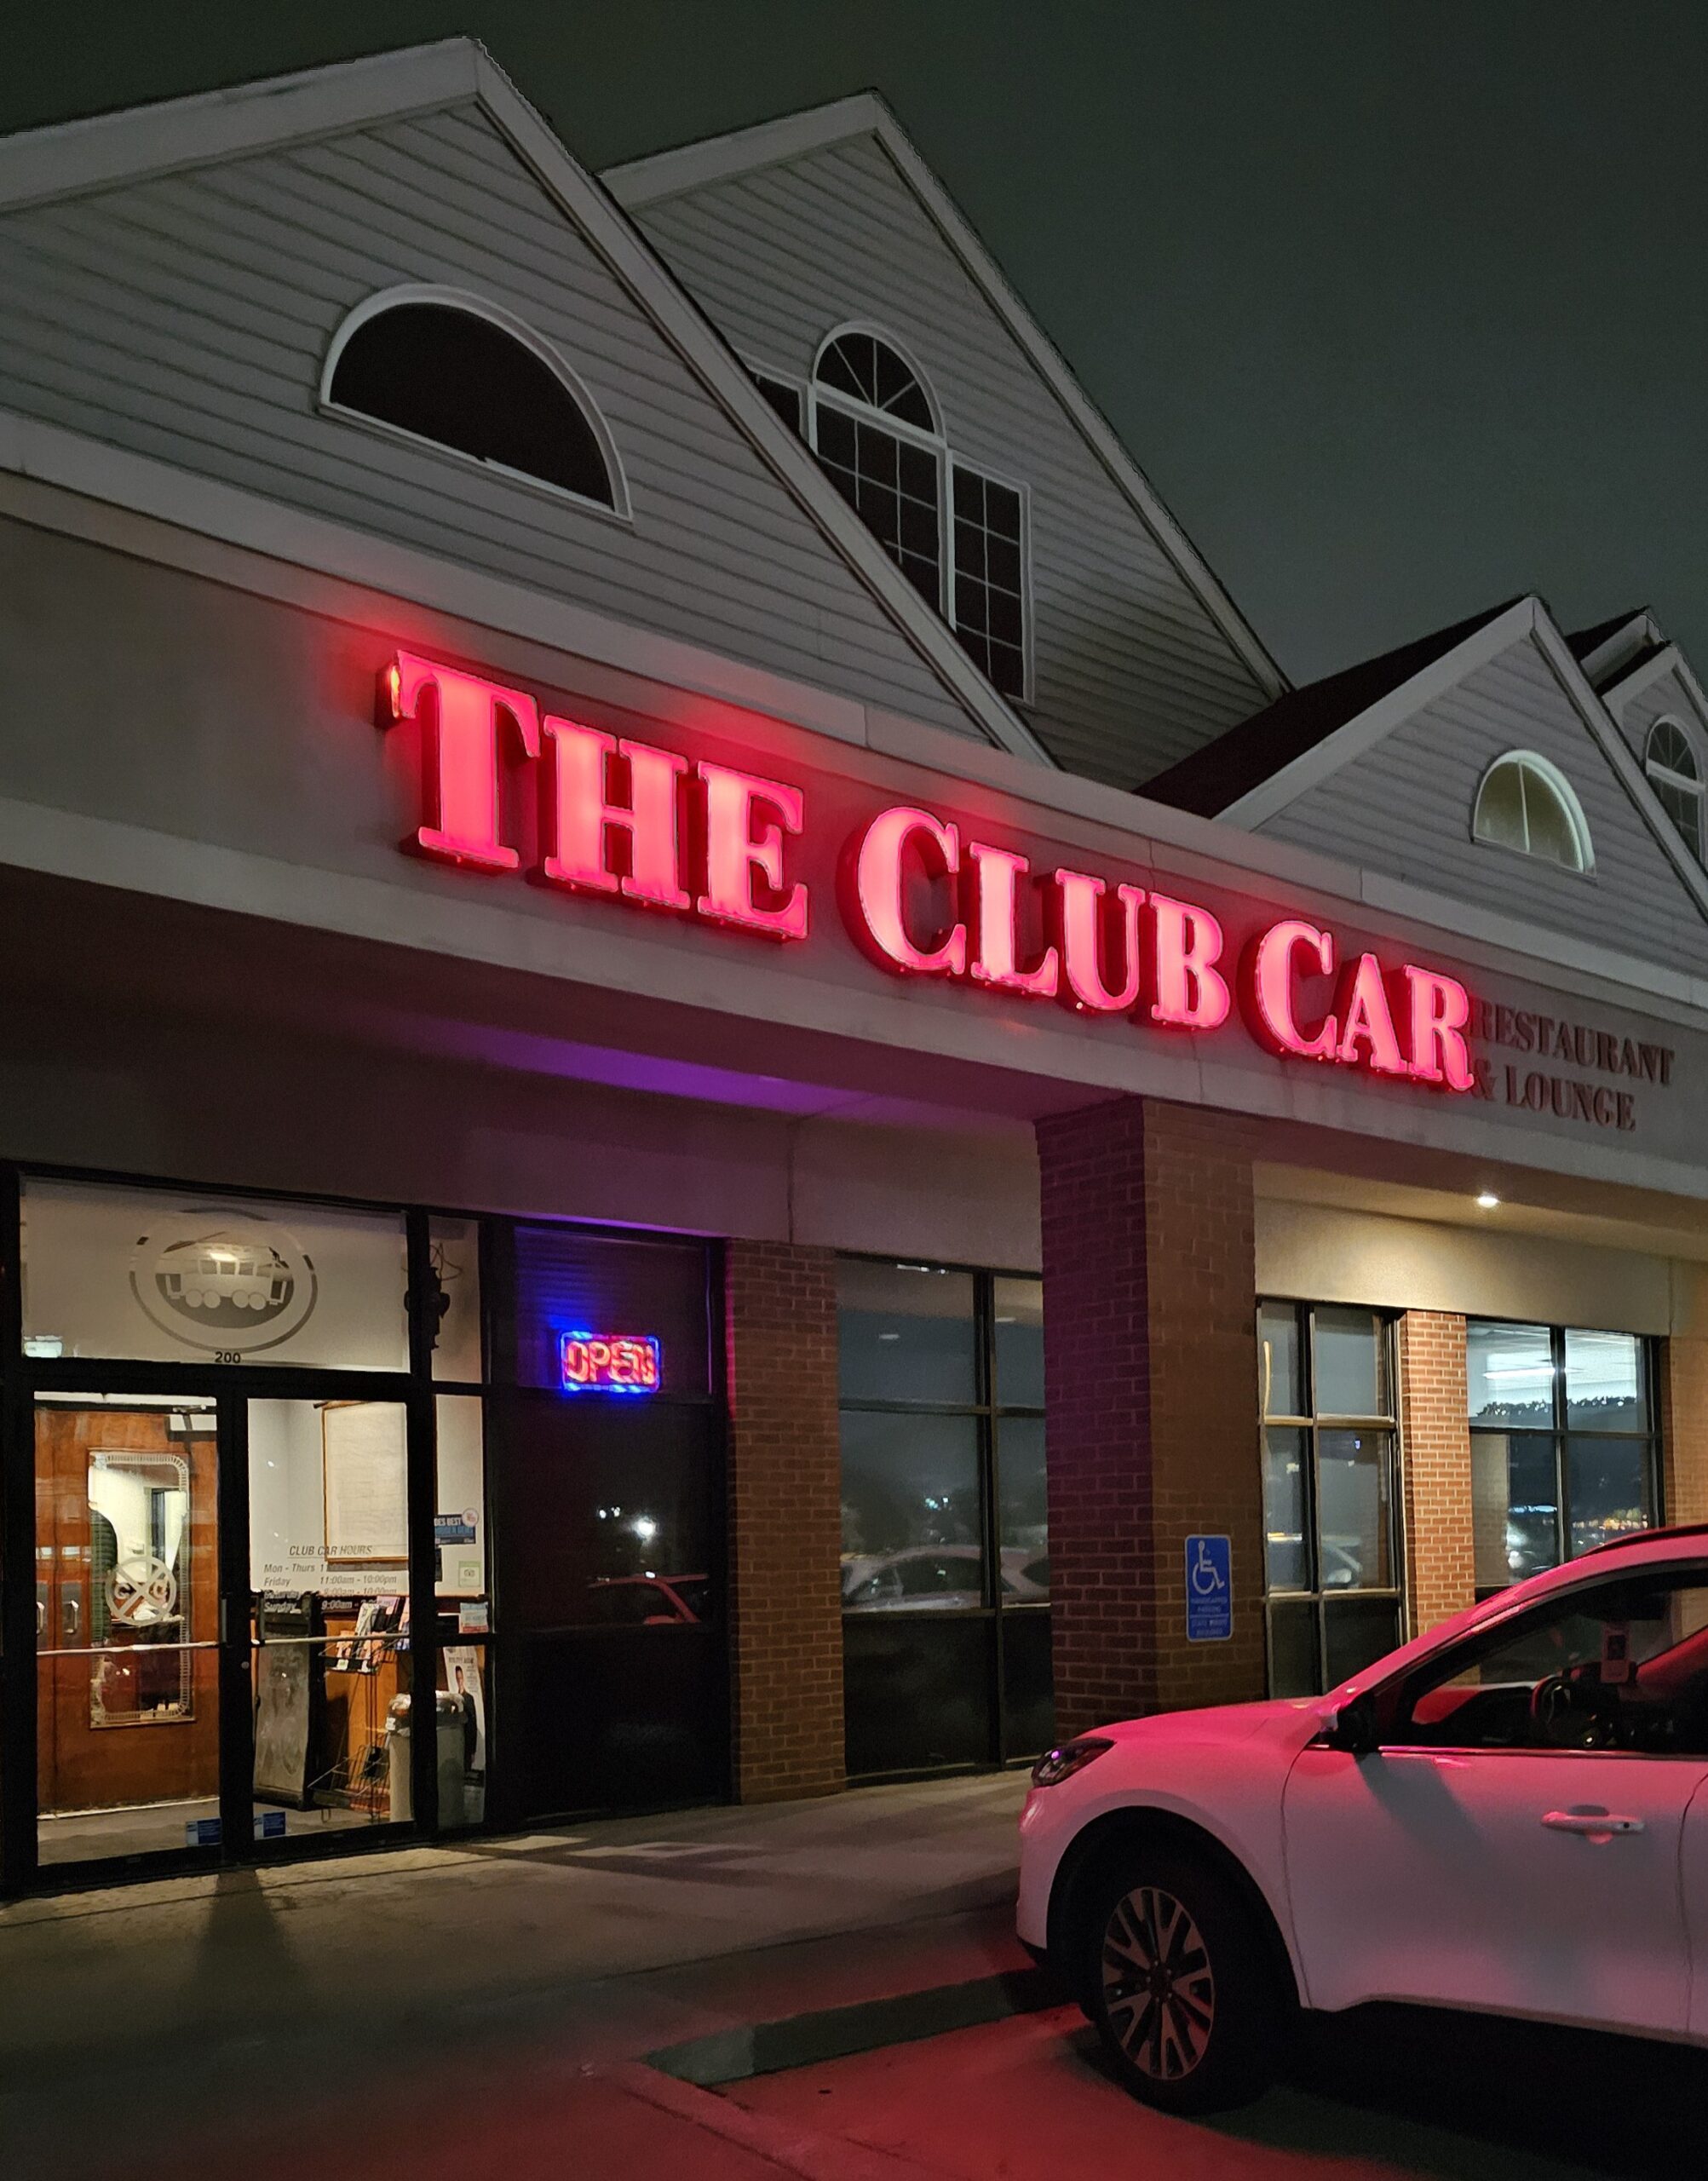 Club Car Restaurant & Lounge (Clive)